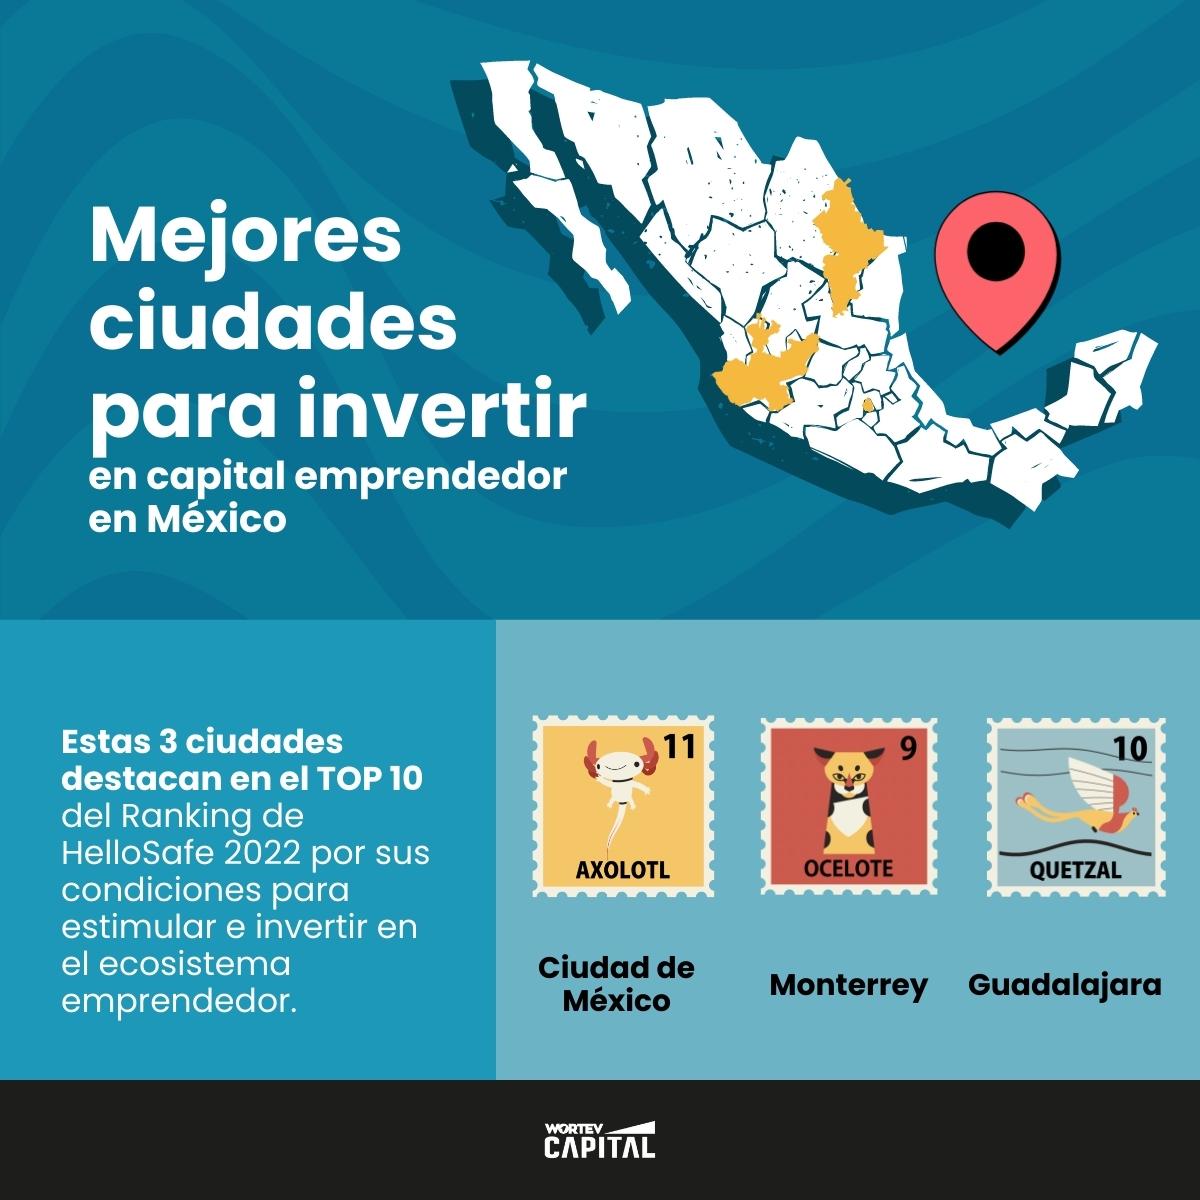 Mejores-ciudades-para-invertir-con-capital-empredendor-en-Mexico-WORTEV-CAPITAL